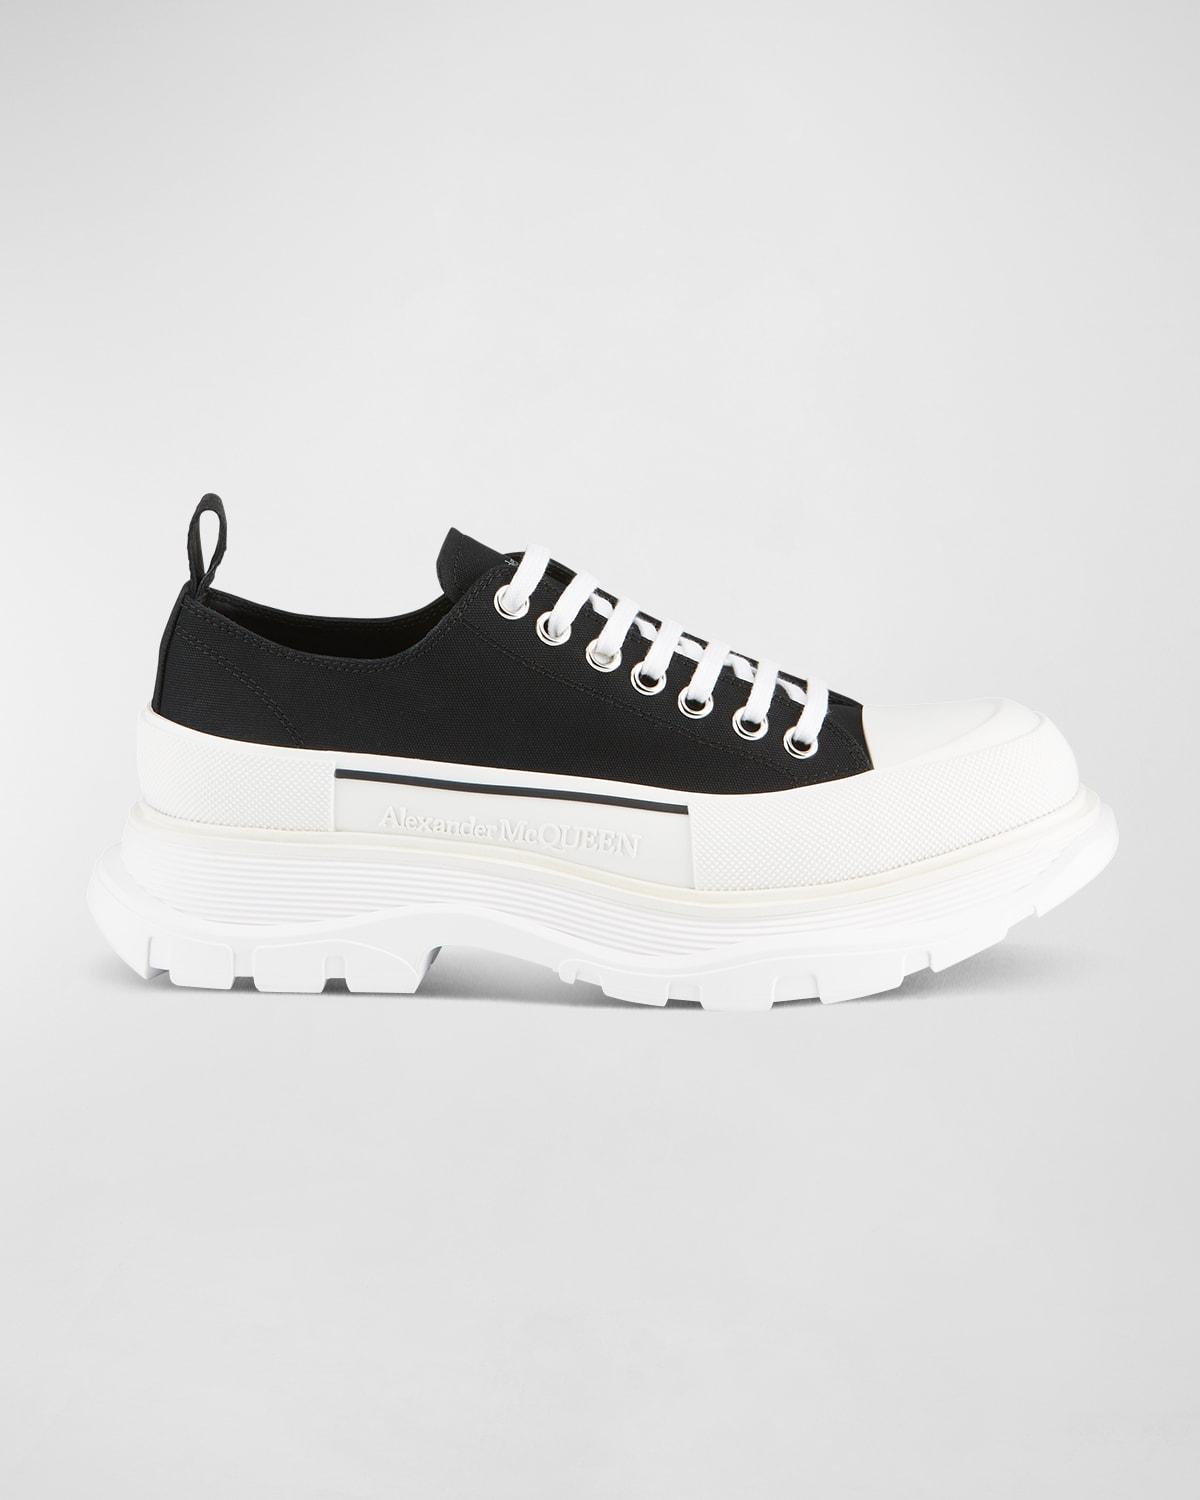 Alexander McQueen Men's Tread Slick Two-Tone Fabric Sneakers - Size: 40 EU (7D US) - BLACK/WHITE Product Image